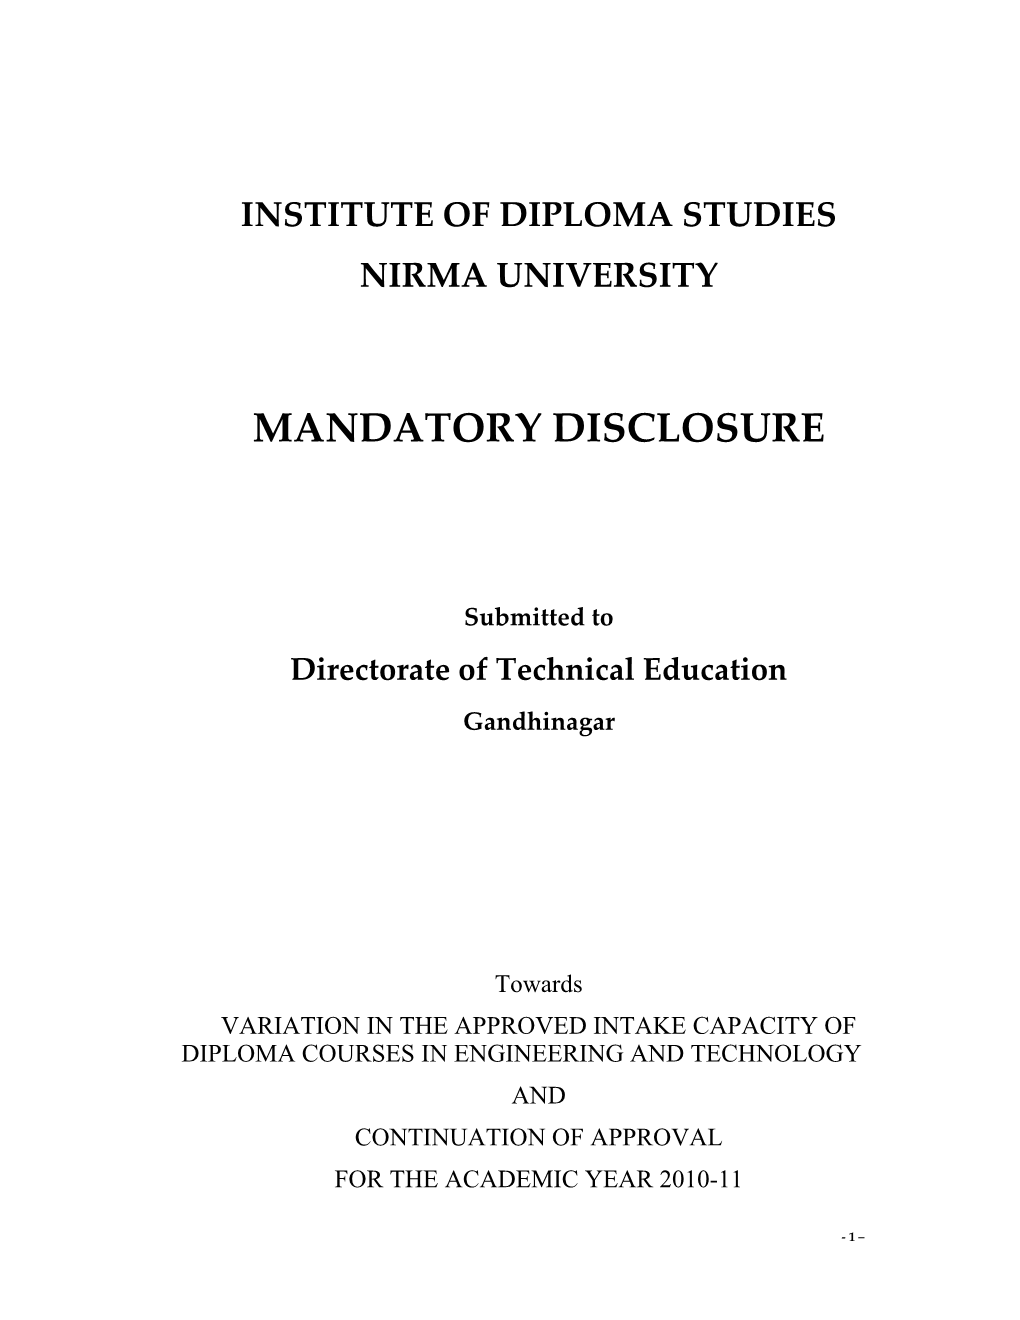 Institute of Management Nirma University Mandatory Disclosure.Pdf